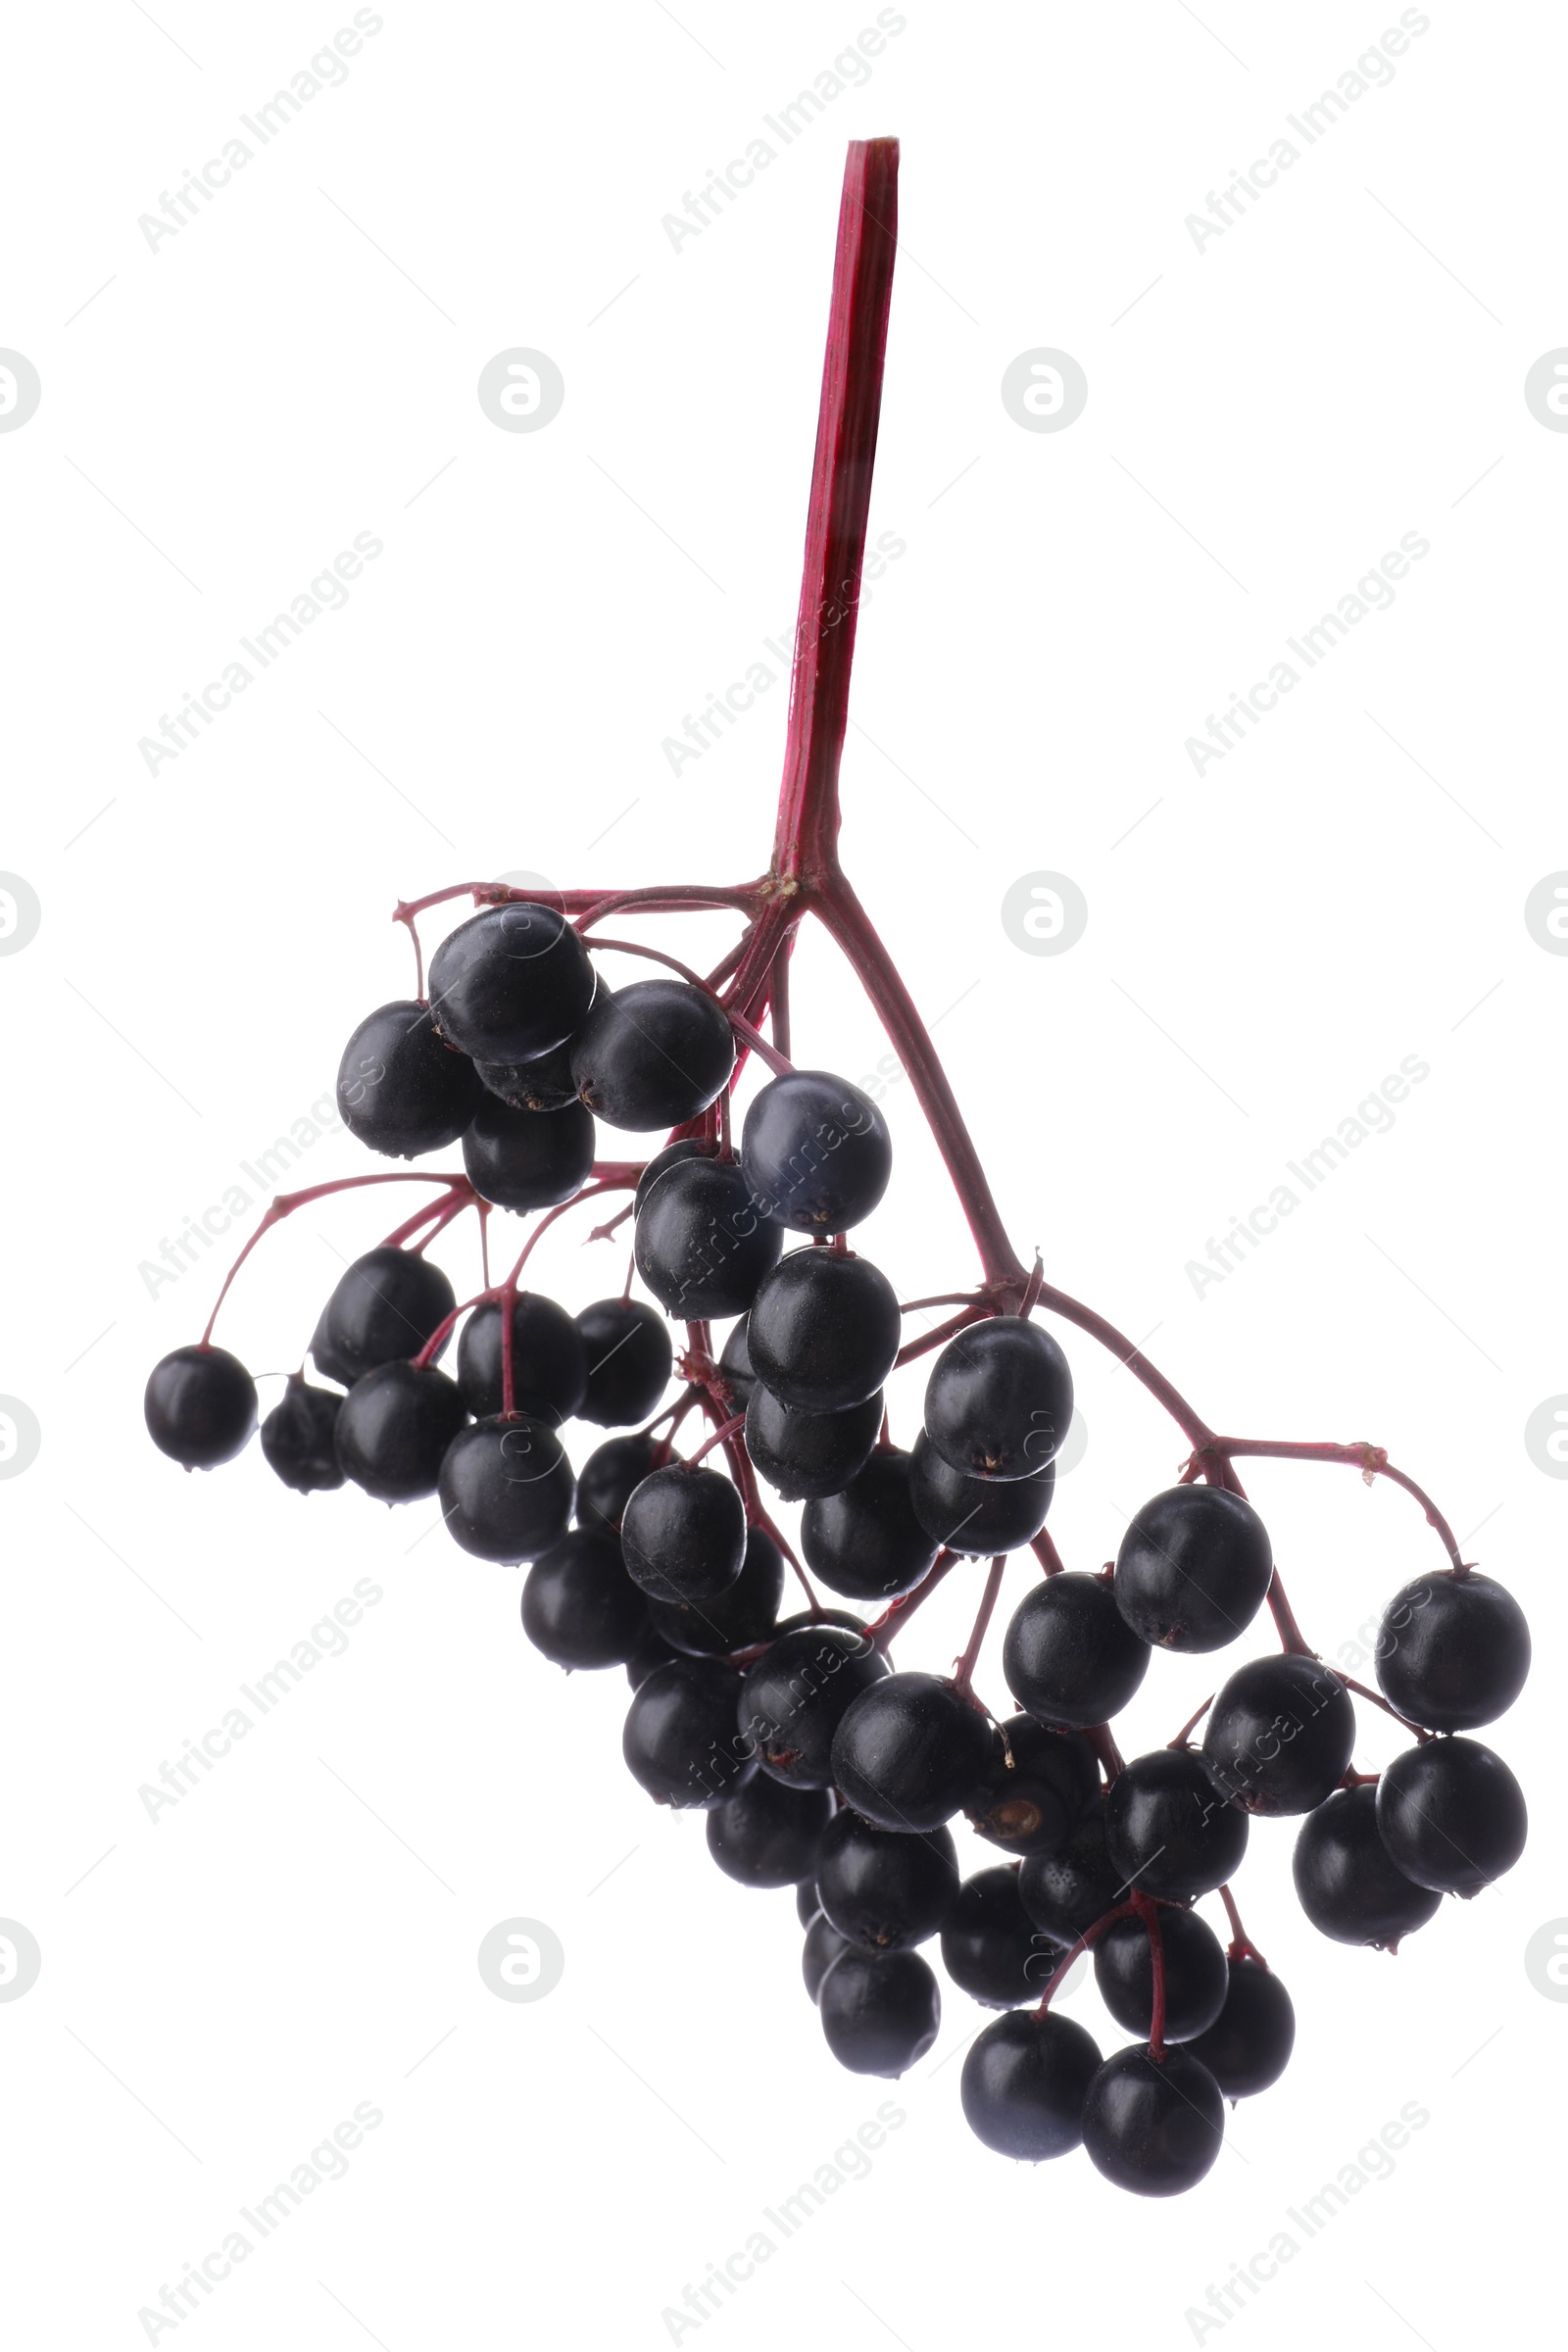 Photo of Bunch of black elderberries (Sambucus) on white background